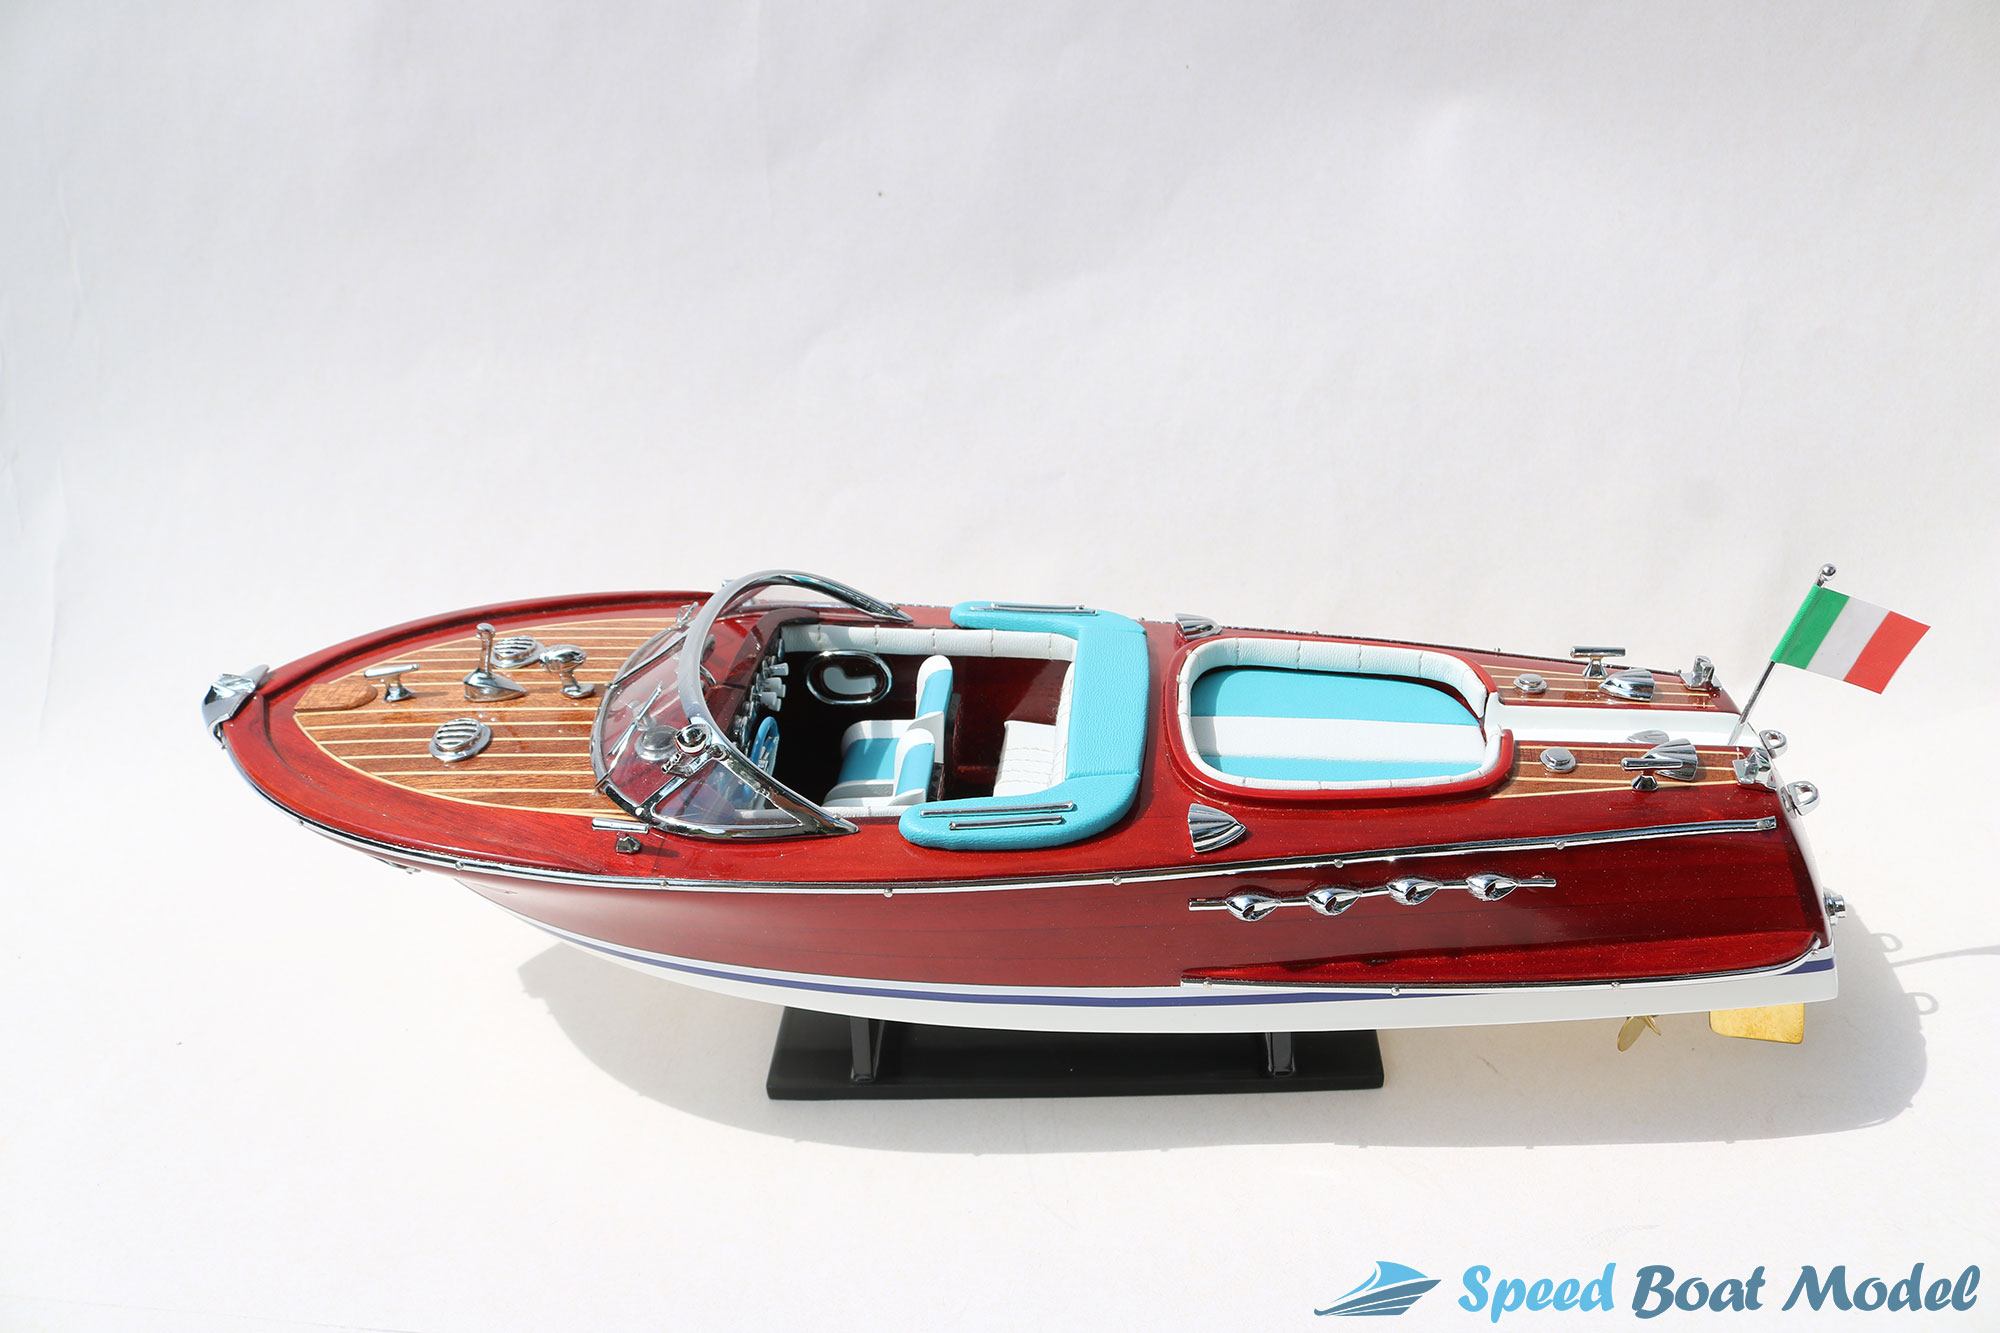 Super Riva Aquarama - Riva Ship Model 15.7"